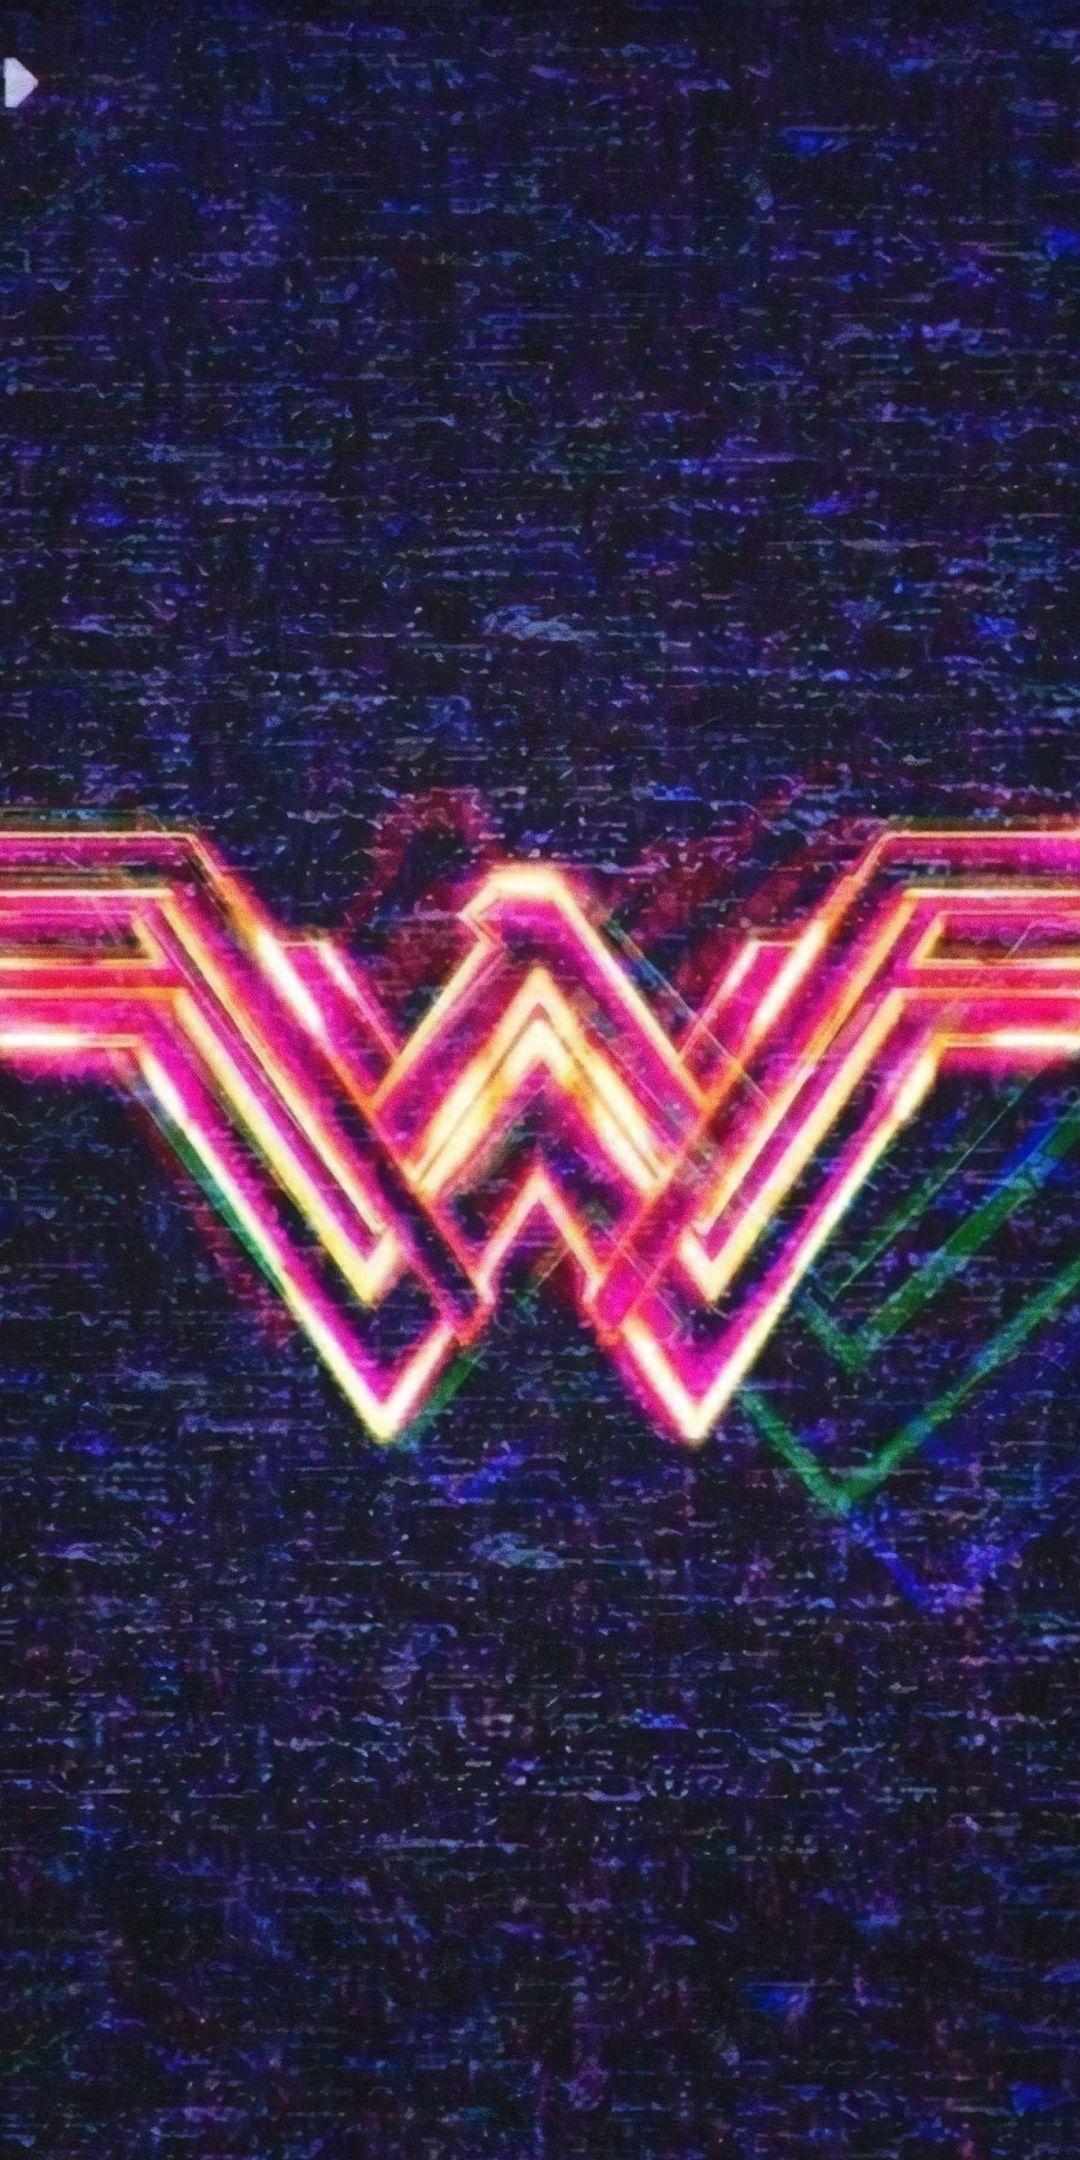 Wonder Woman movie, logo, poster wallpaper